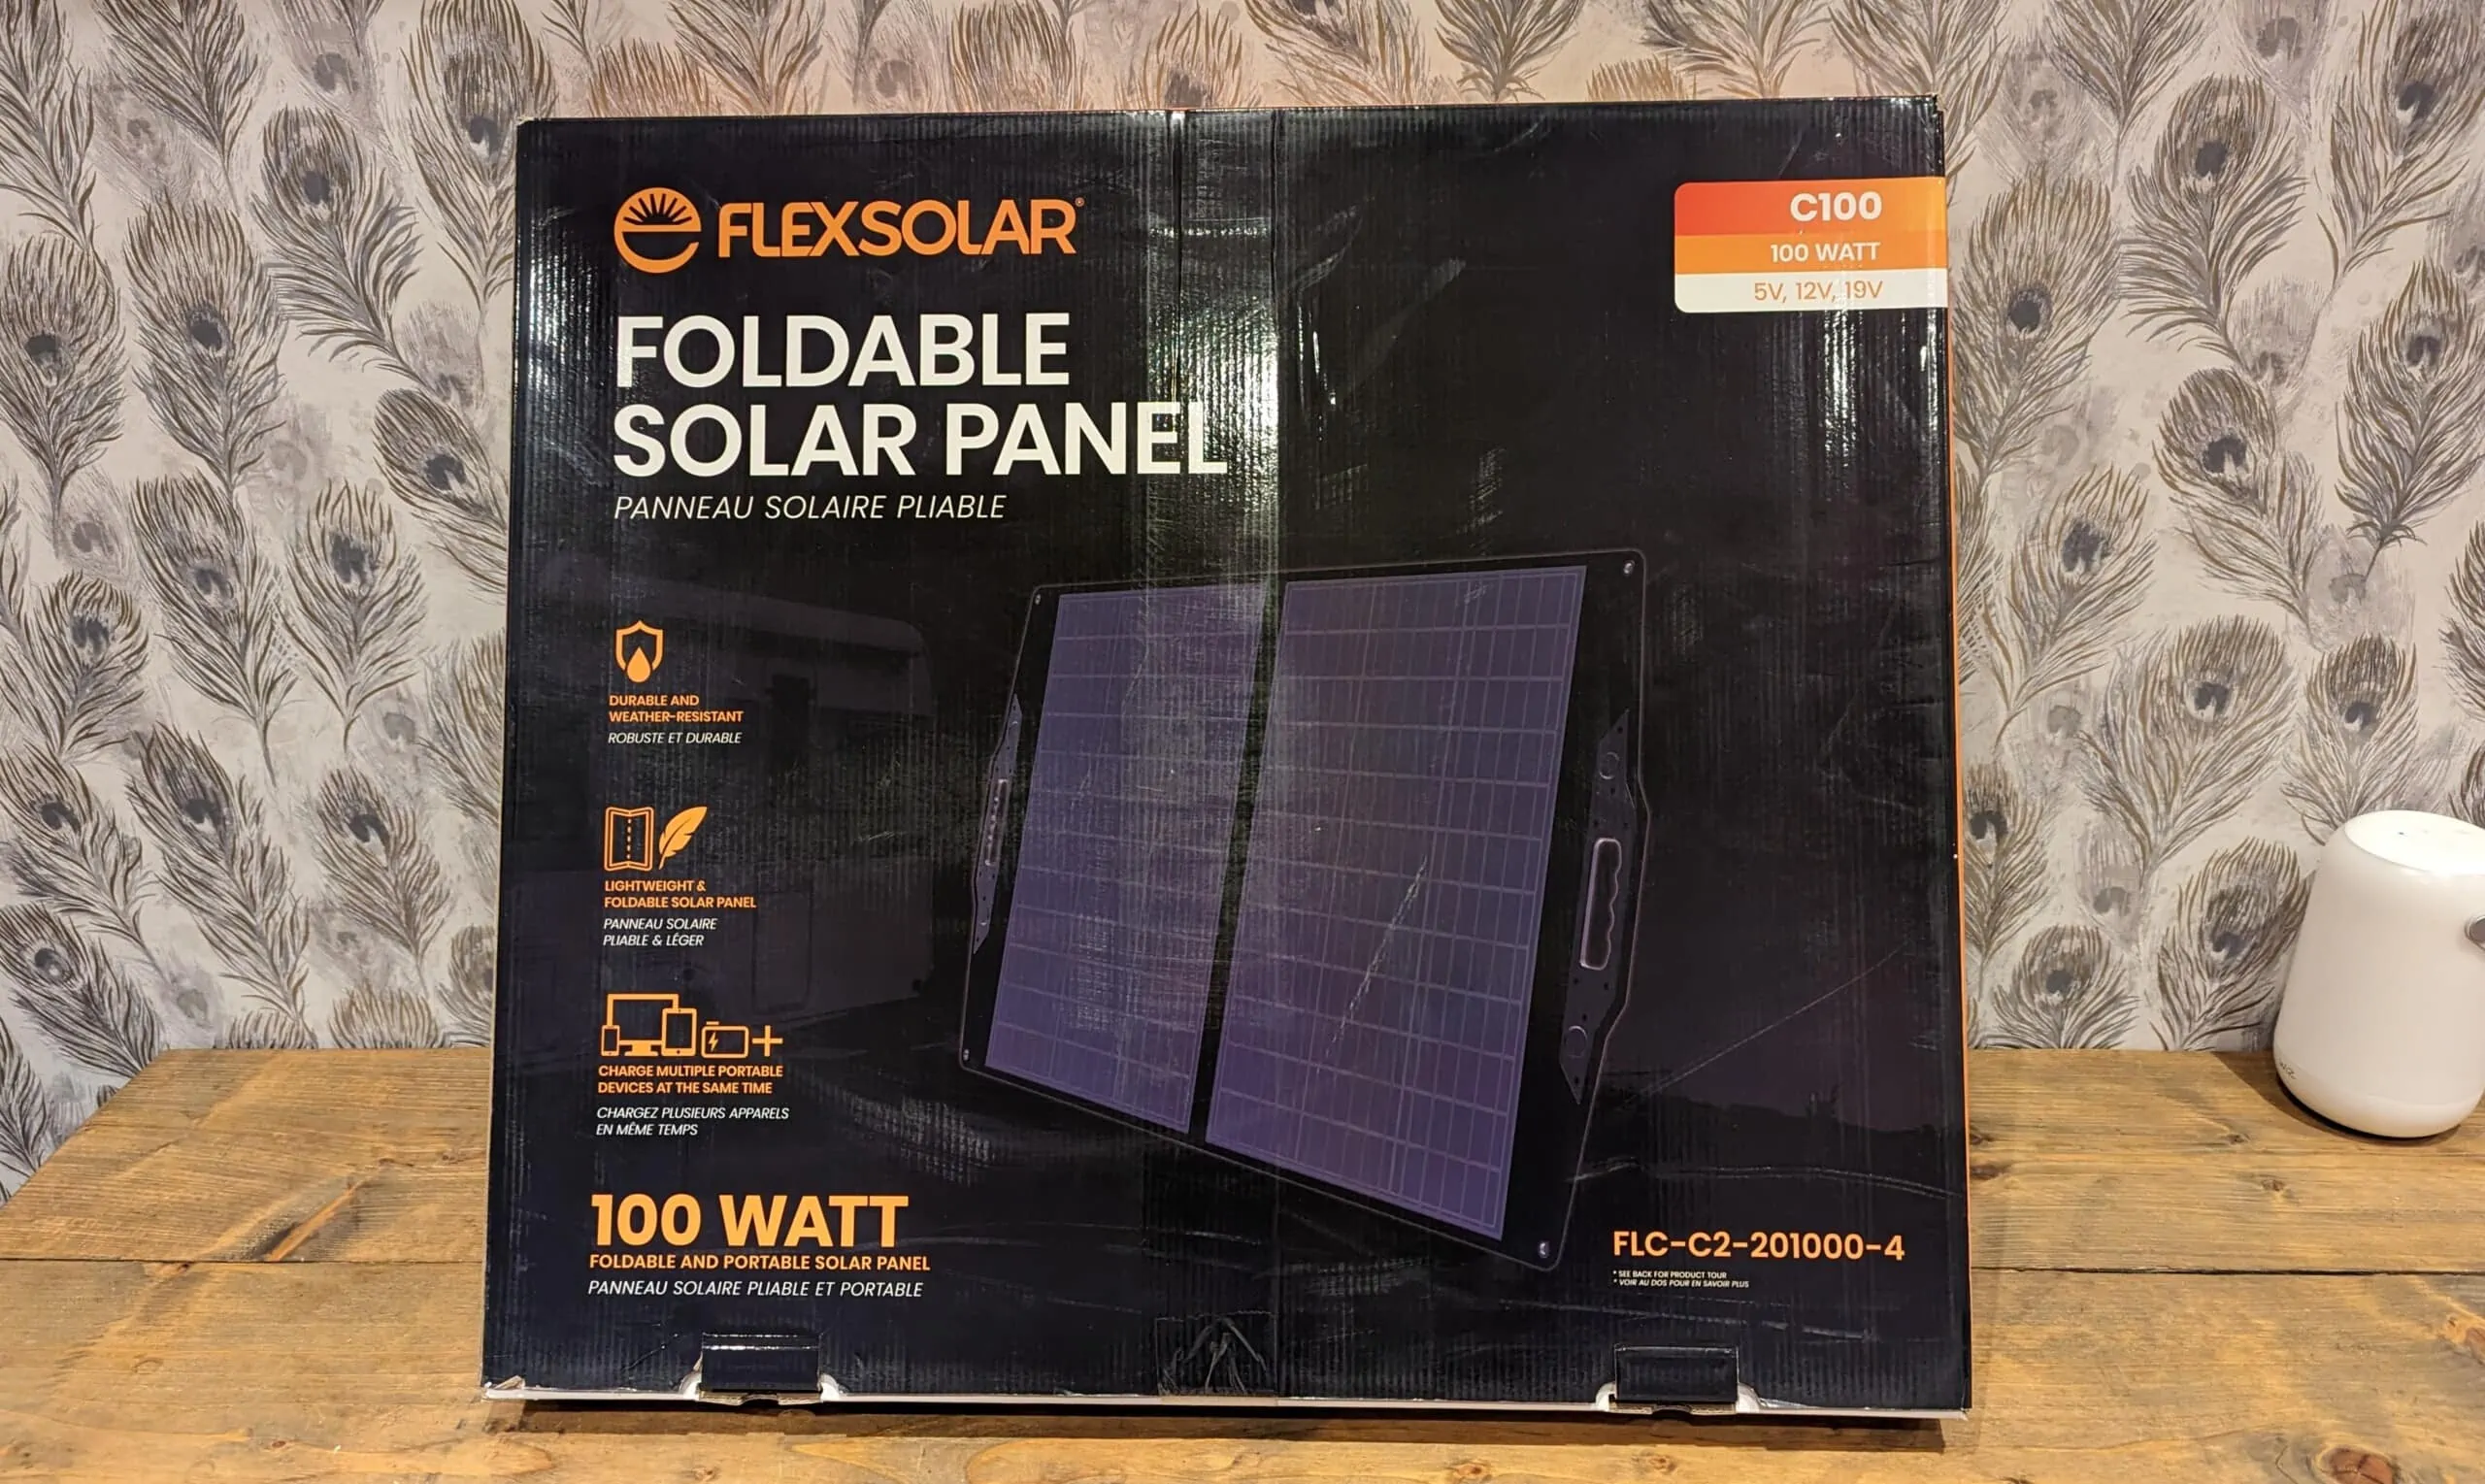 FlexSolar Foldable 100W Solar Panel Review vs Mobisolar & Jackery SolarSaga